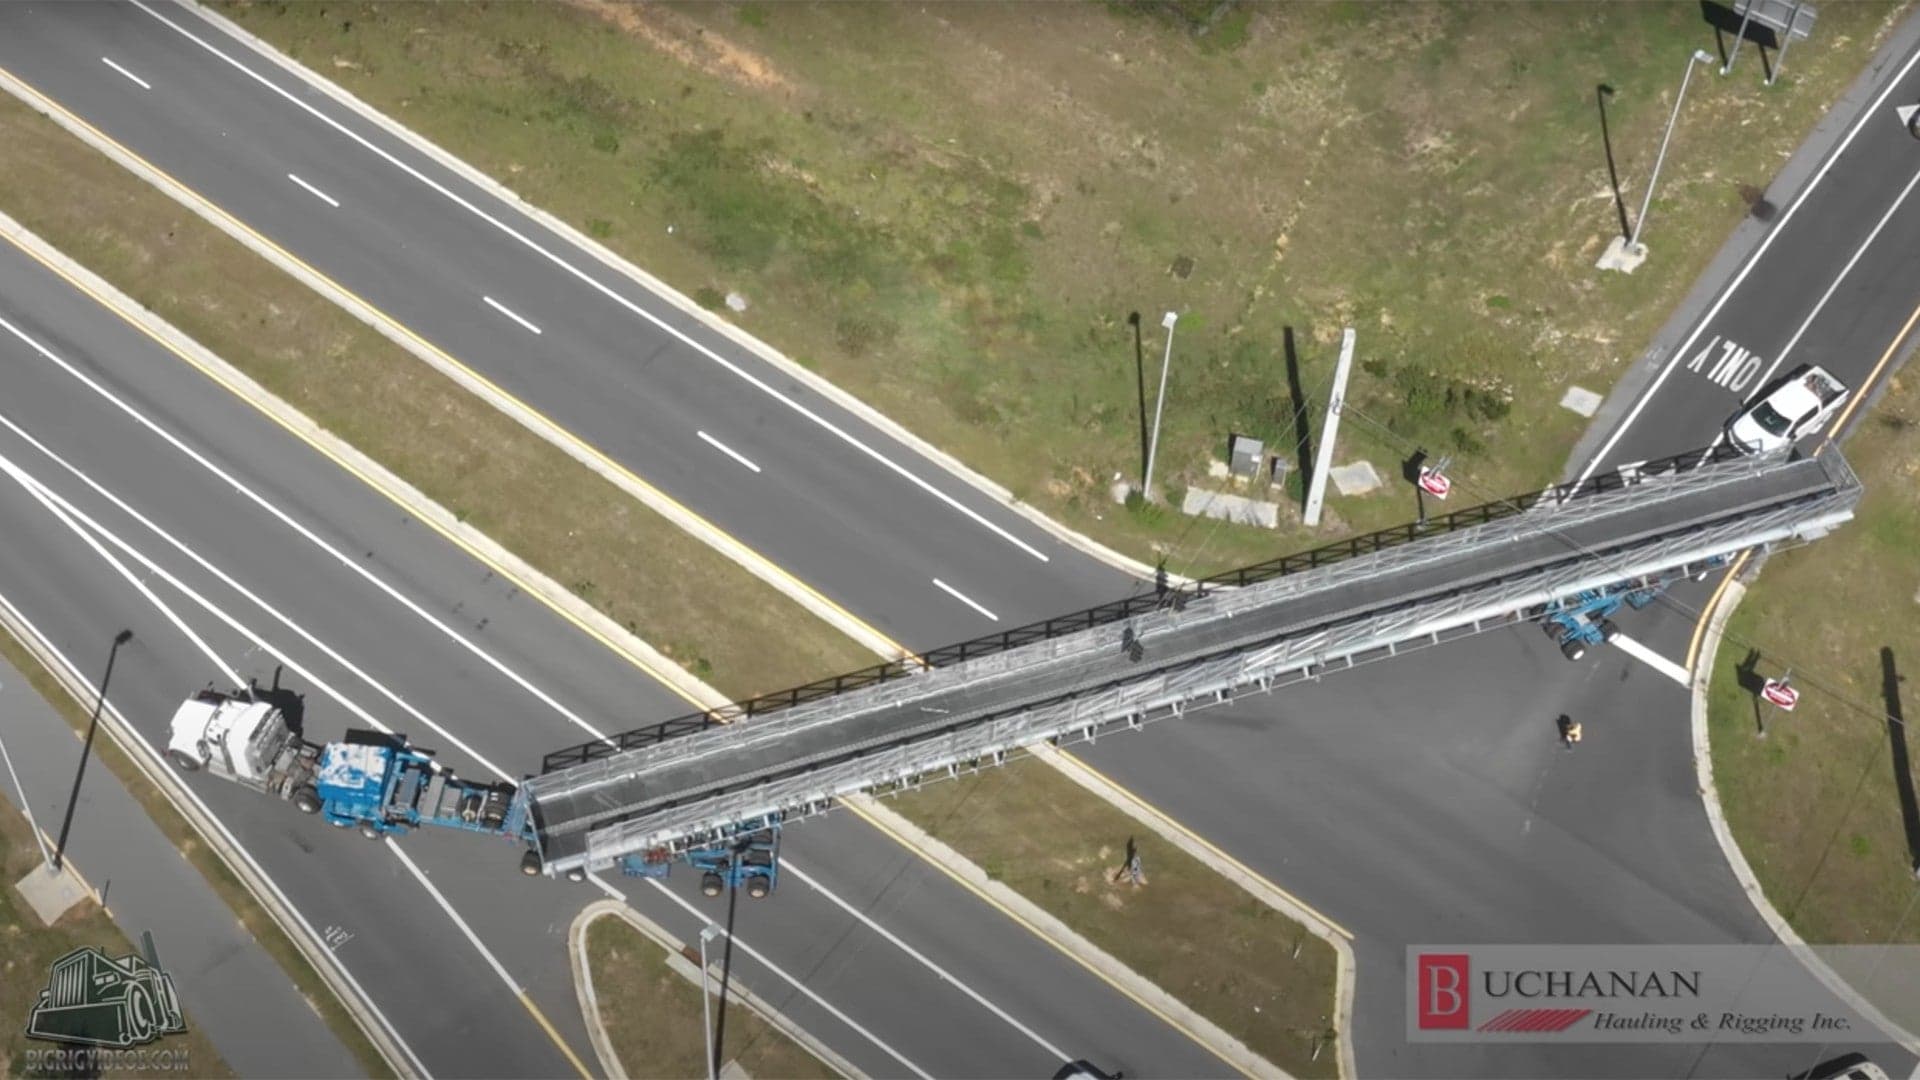 How a Semi-Truck Hauls a 235-Foot, 335,000-Pound Super Load Down Public Roads